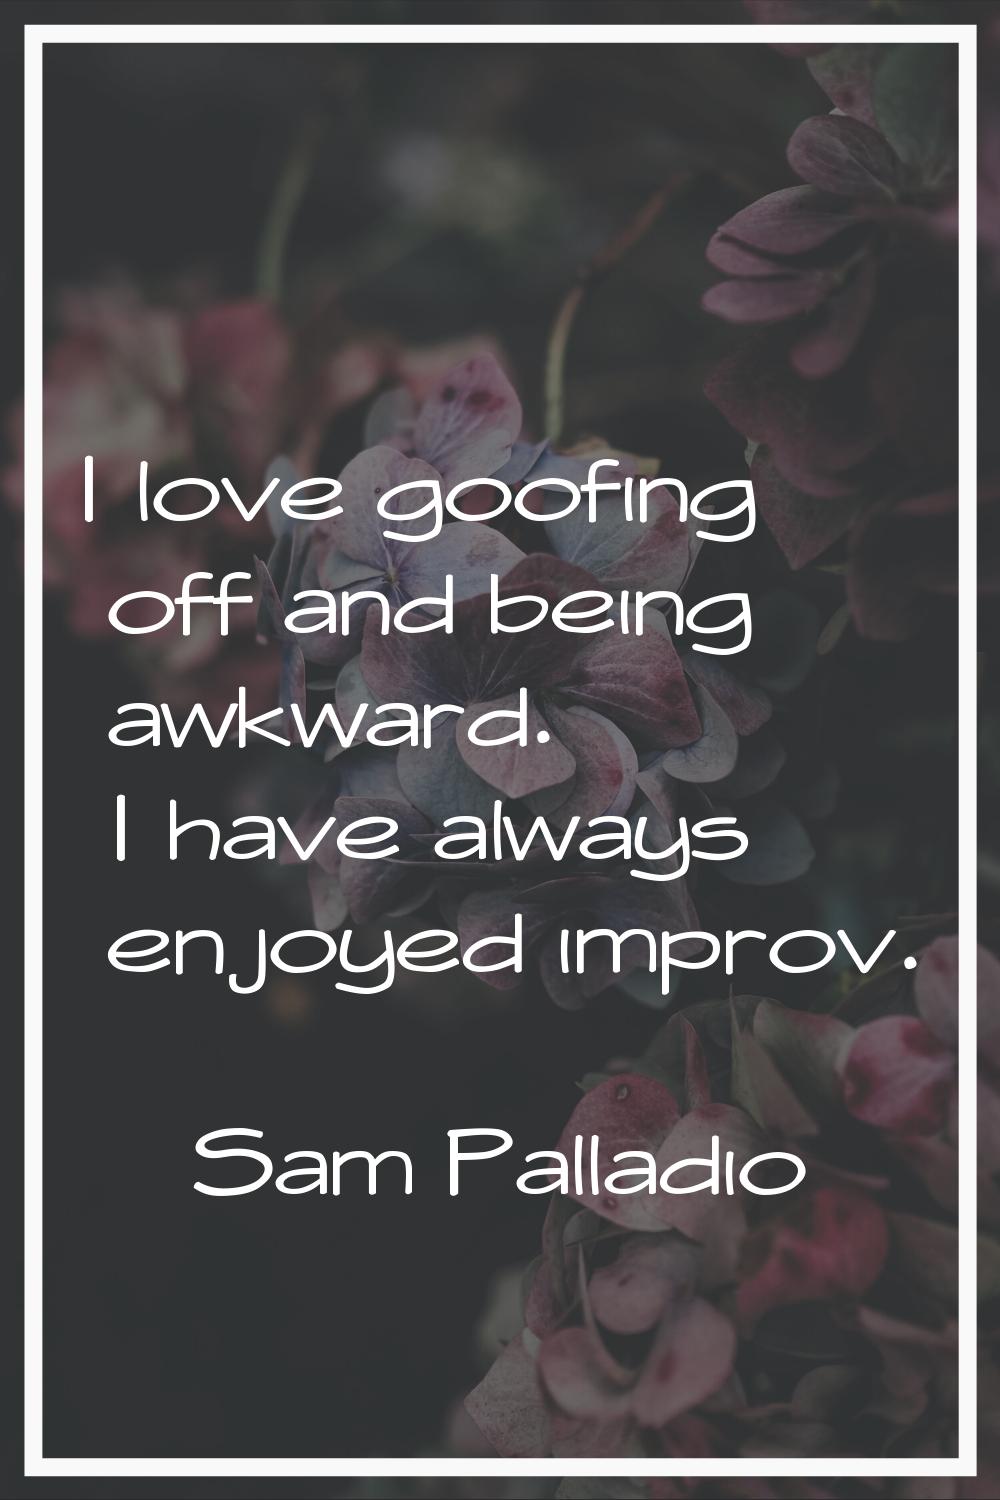 I love goofing off and being awkward. I have always enjoyed improv.